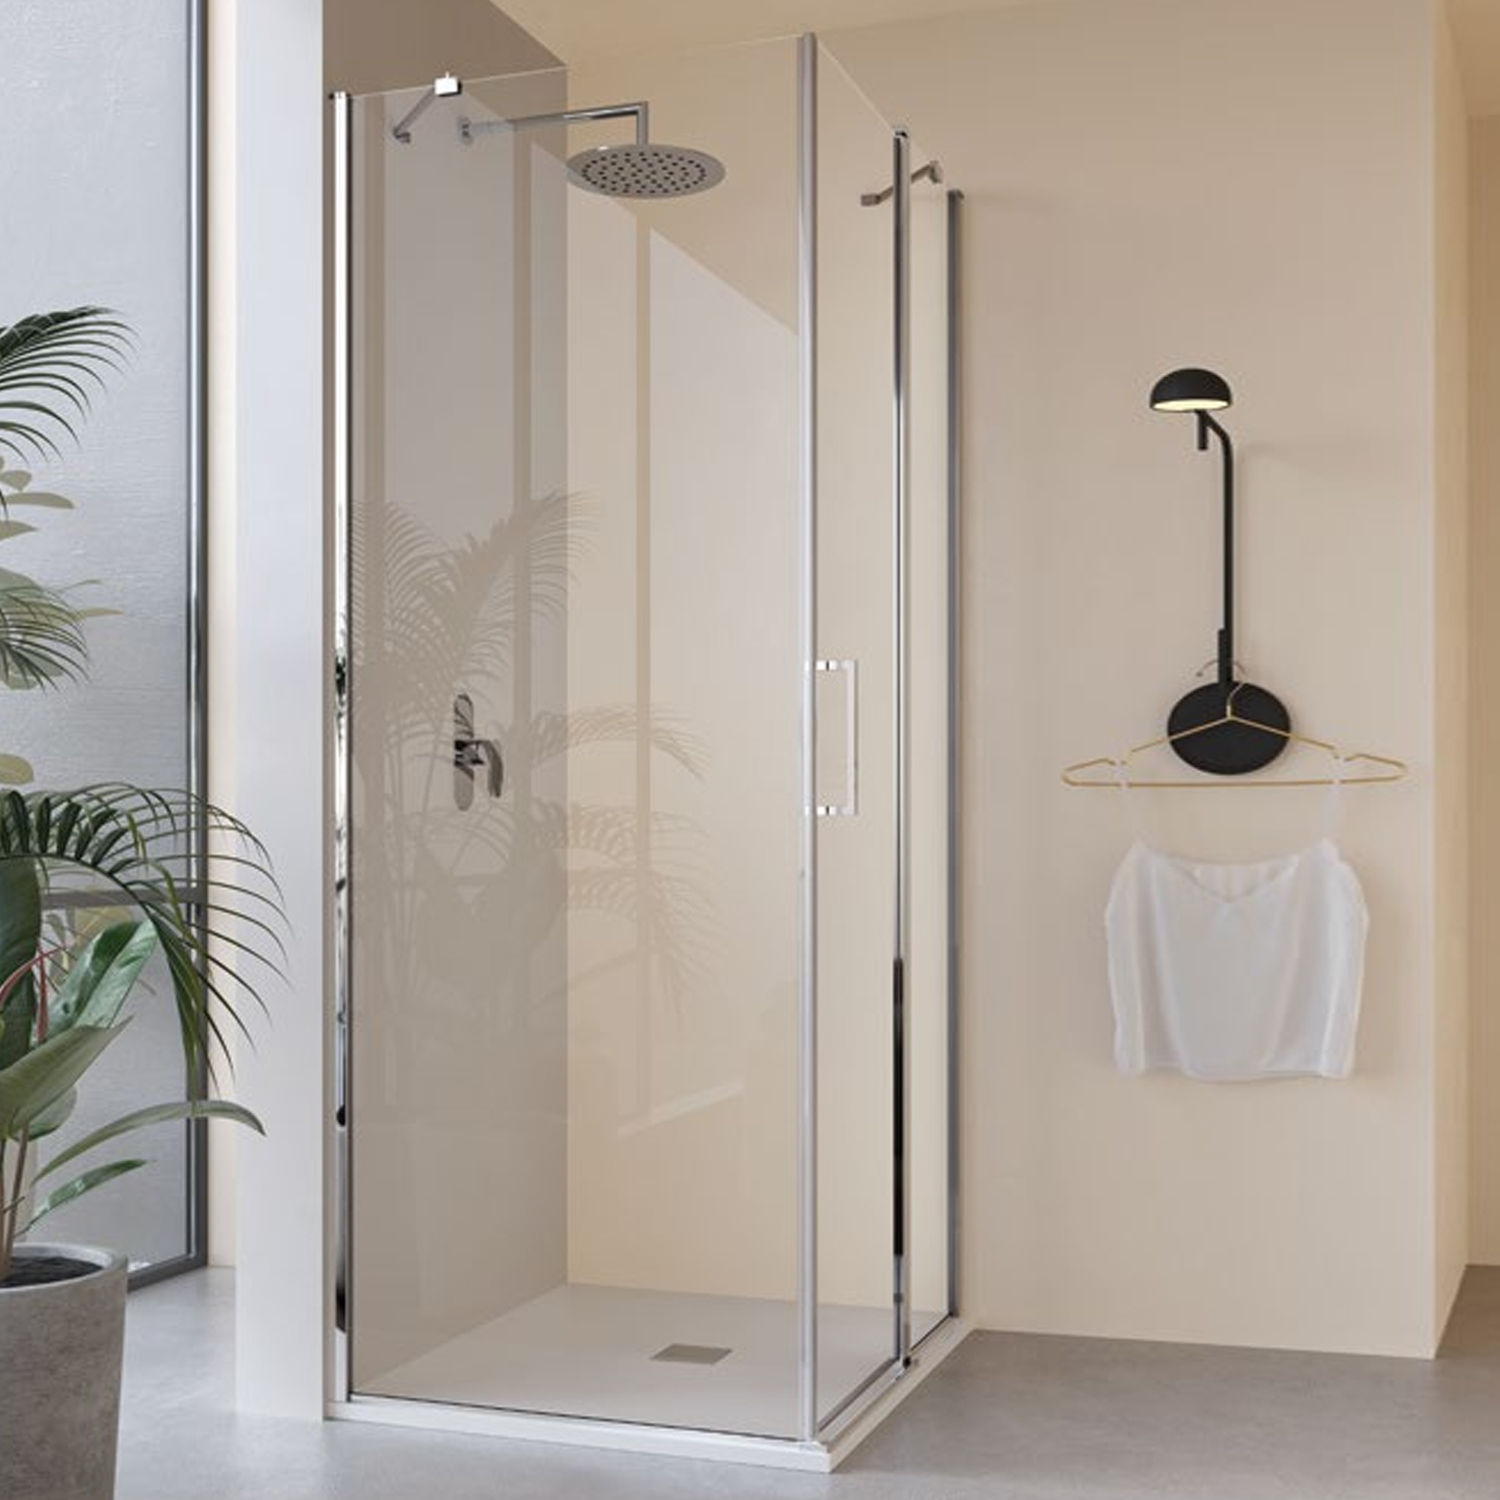 Mampara de ducha fijo + abatible altura 200 cm - Serie 7